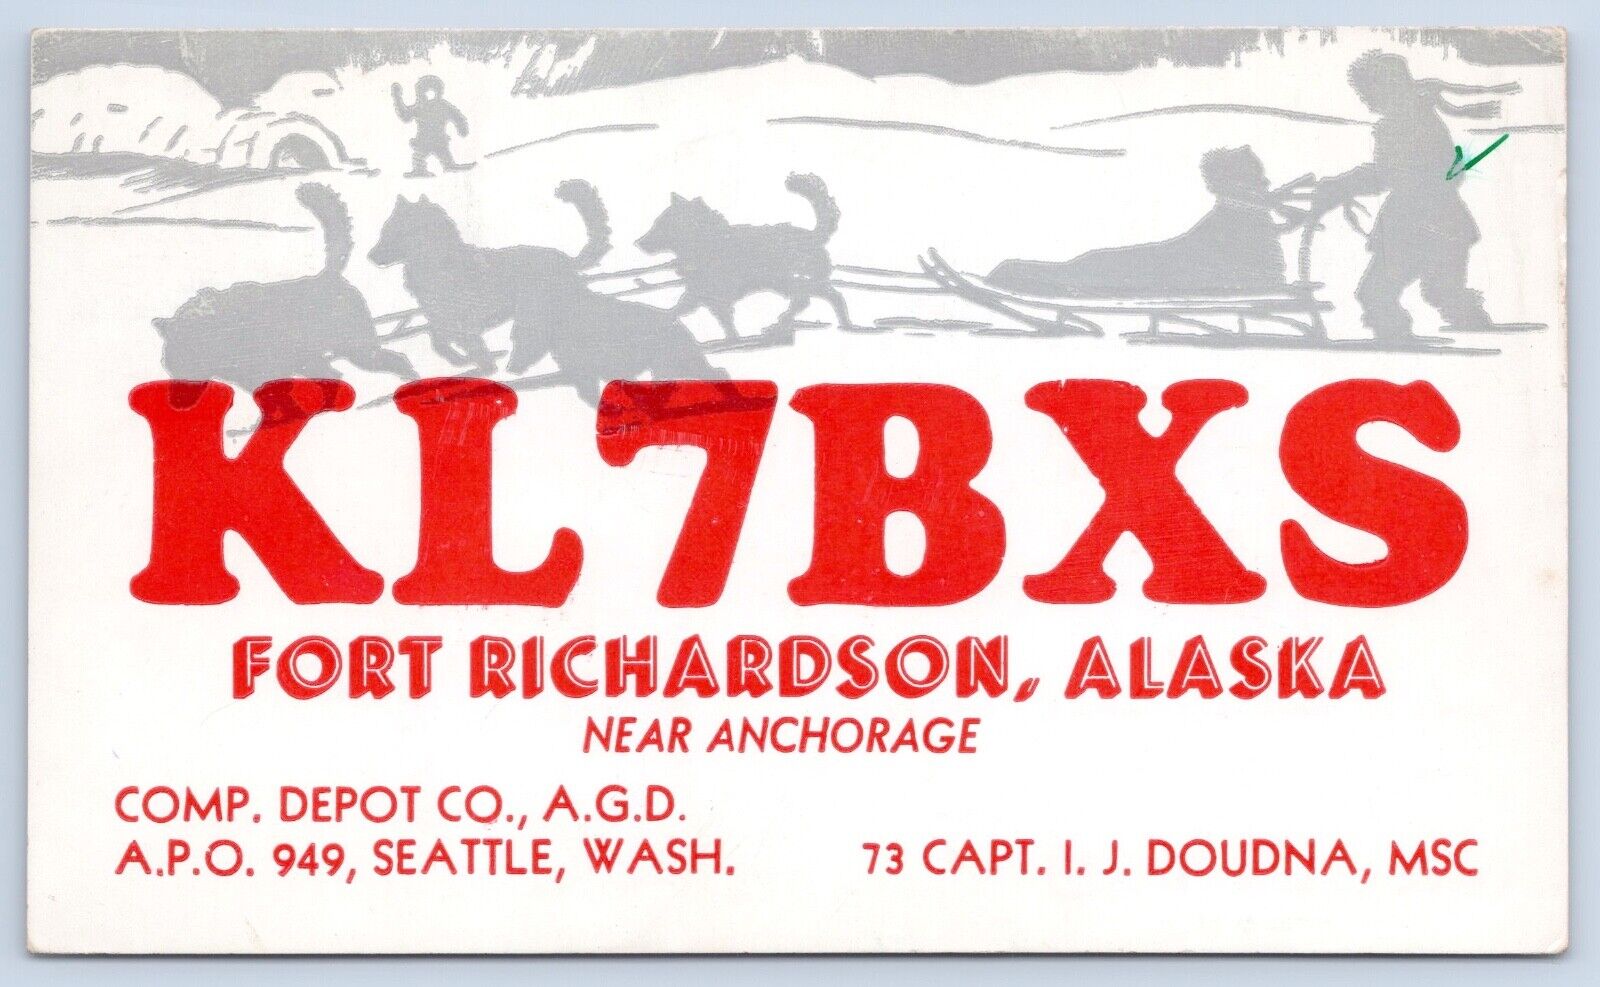 QSL CB Ham Radio KL7BXS Fort Richardson Alaska Capt. IJ Doudna Vtg AK 1957 Card